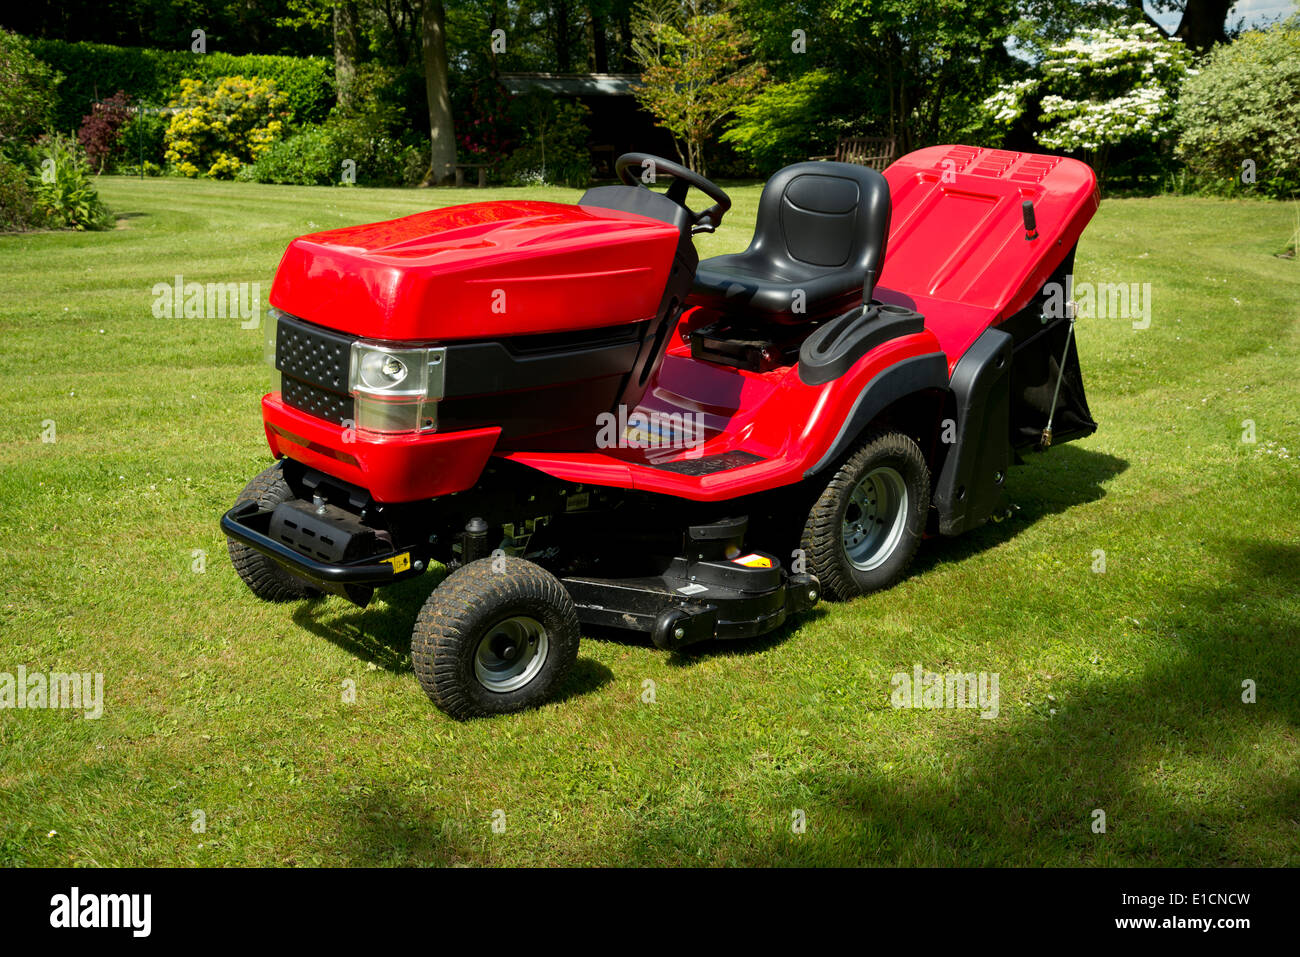 Red garden tractor, or ride on mower, in an verdant garden. Stock Photo